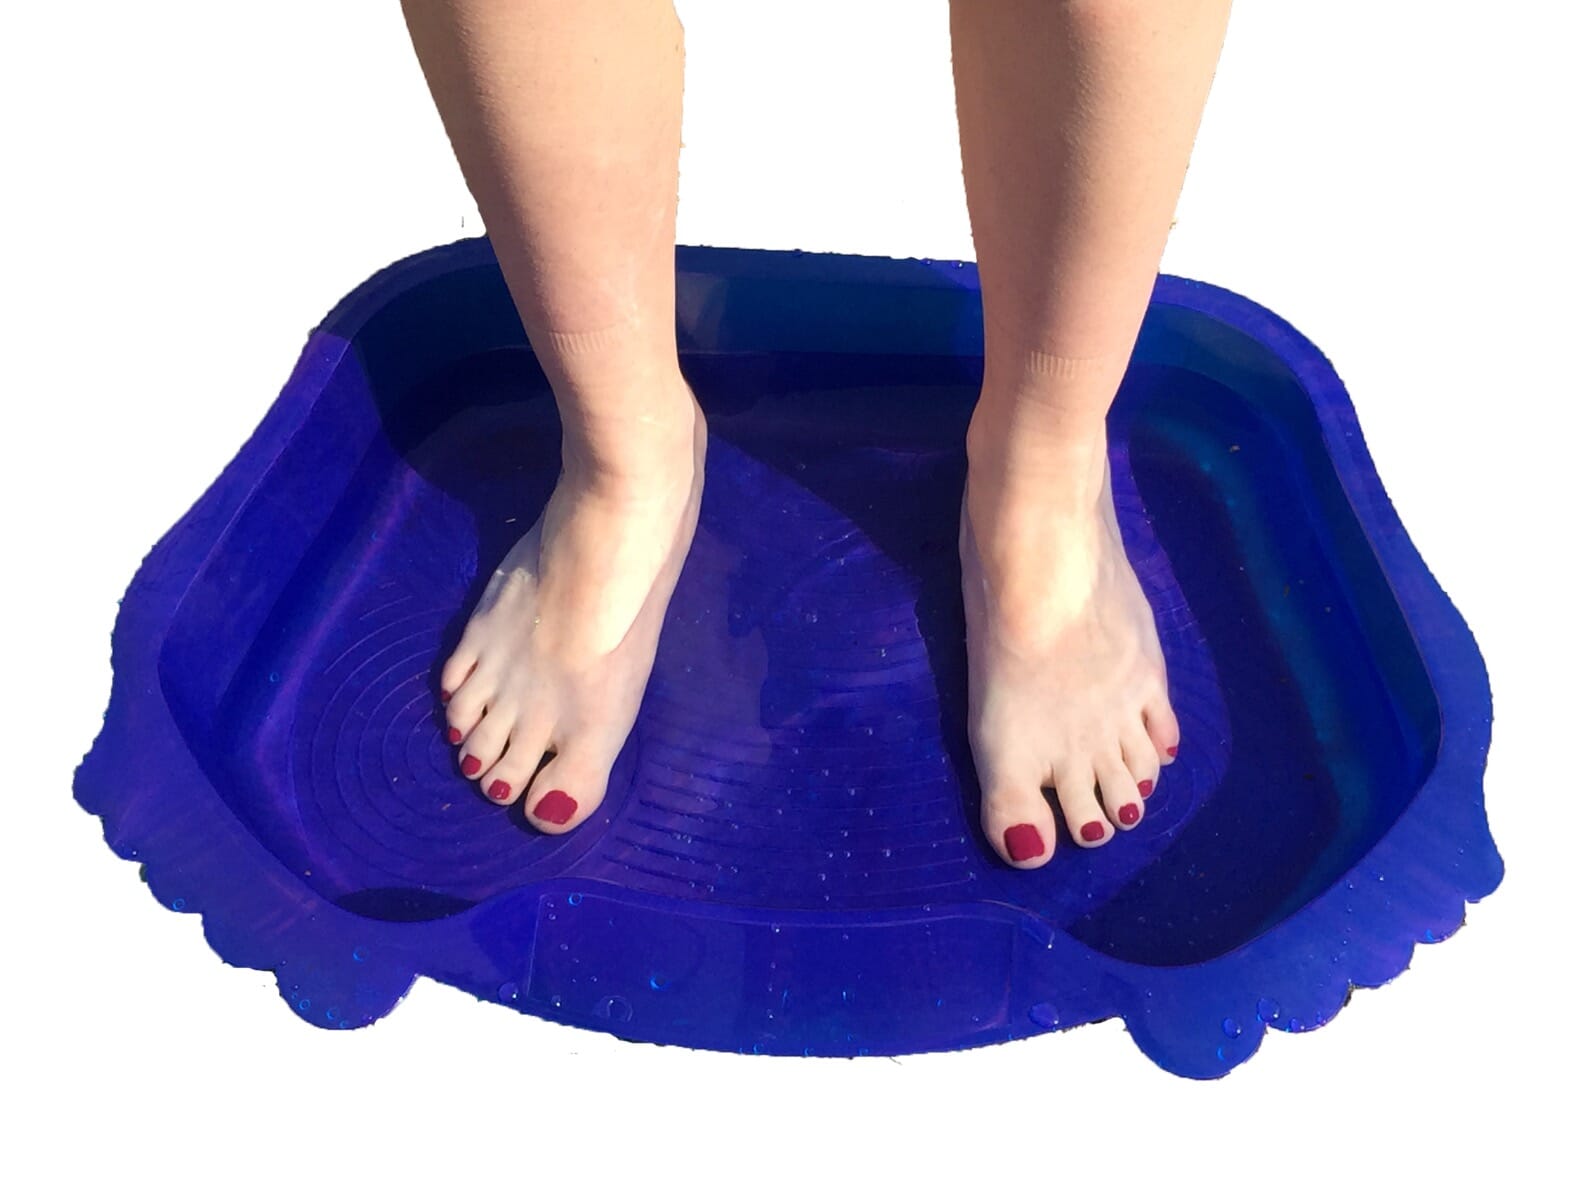 Premium Hot Tub Accessories Long-Lasting Design CosySpa Hot Tub Foot Bath Foot Basin For All Spas & Pools Ensure Pool Water Is Clean & Hygienic